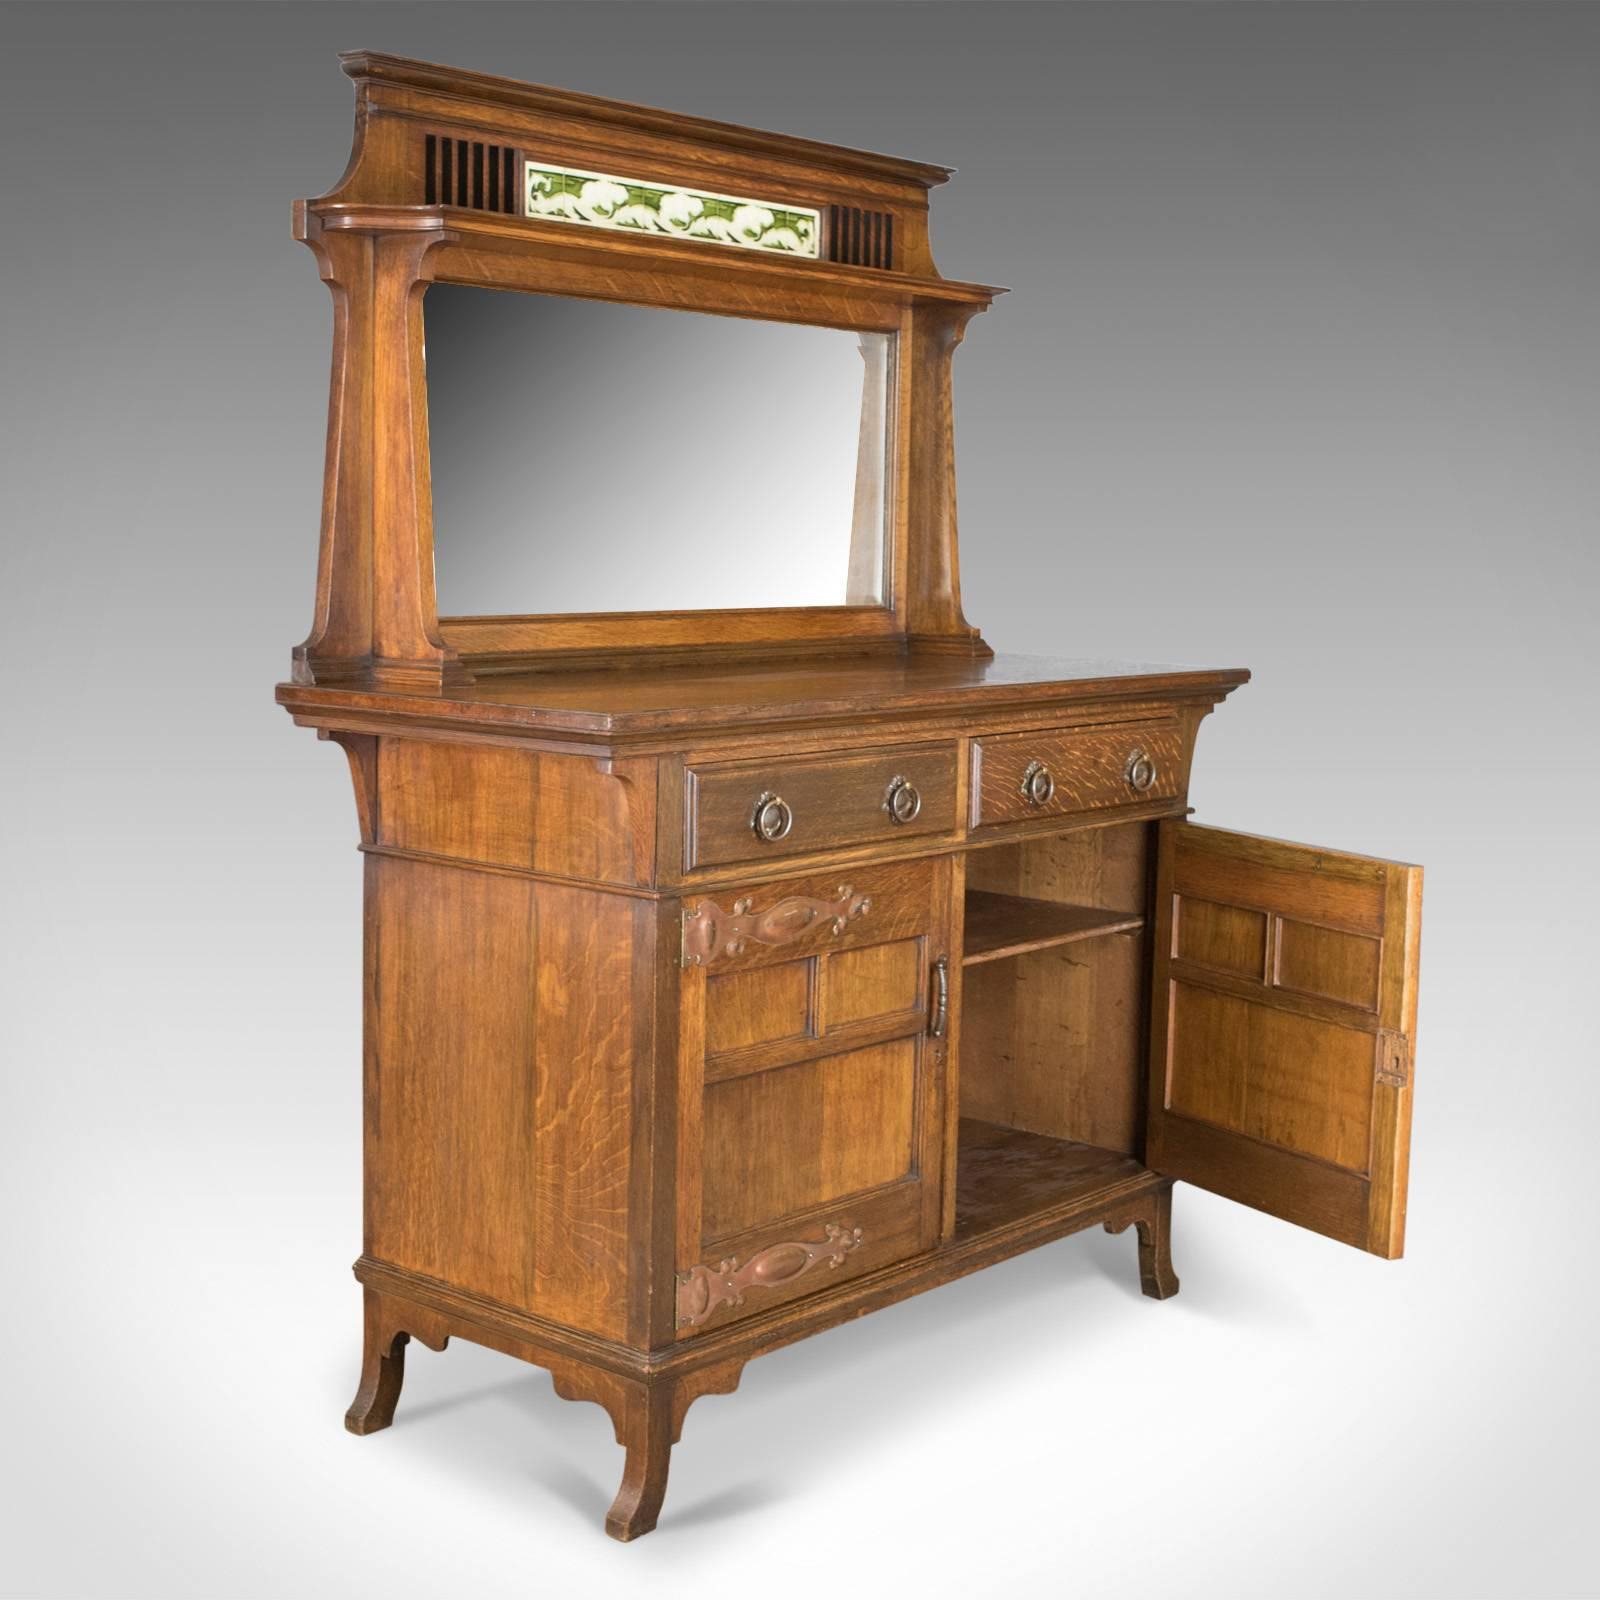 Antique Sideboard, English Oak, Arts & Crafts Cabinet, Liberty Taste, circa 1900 For Sale 1